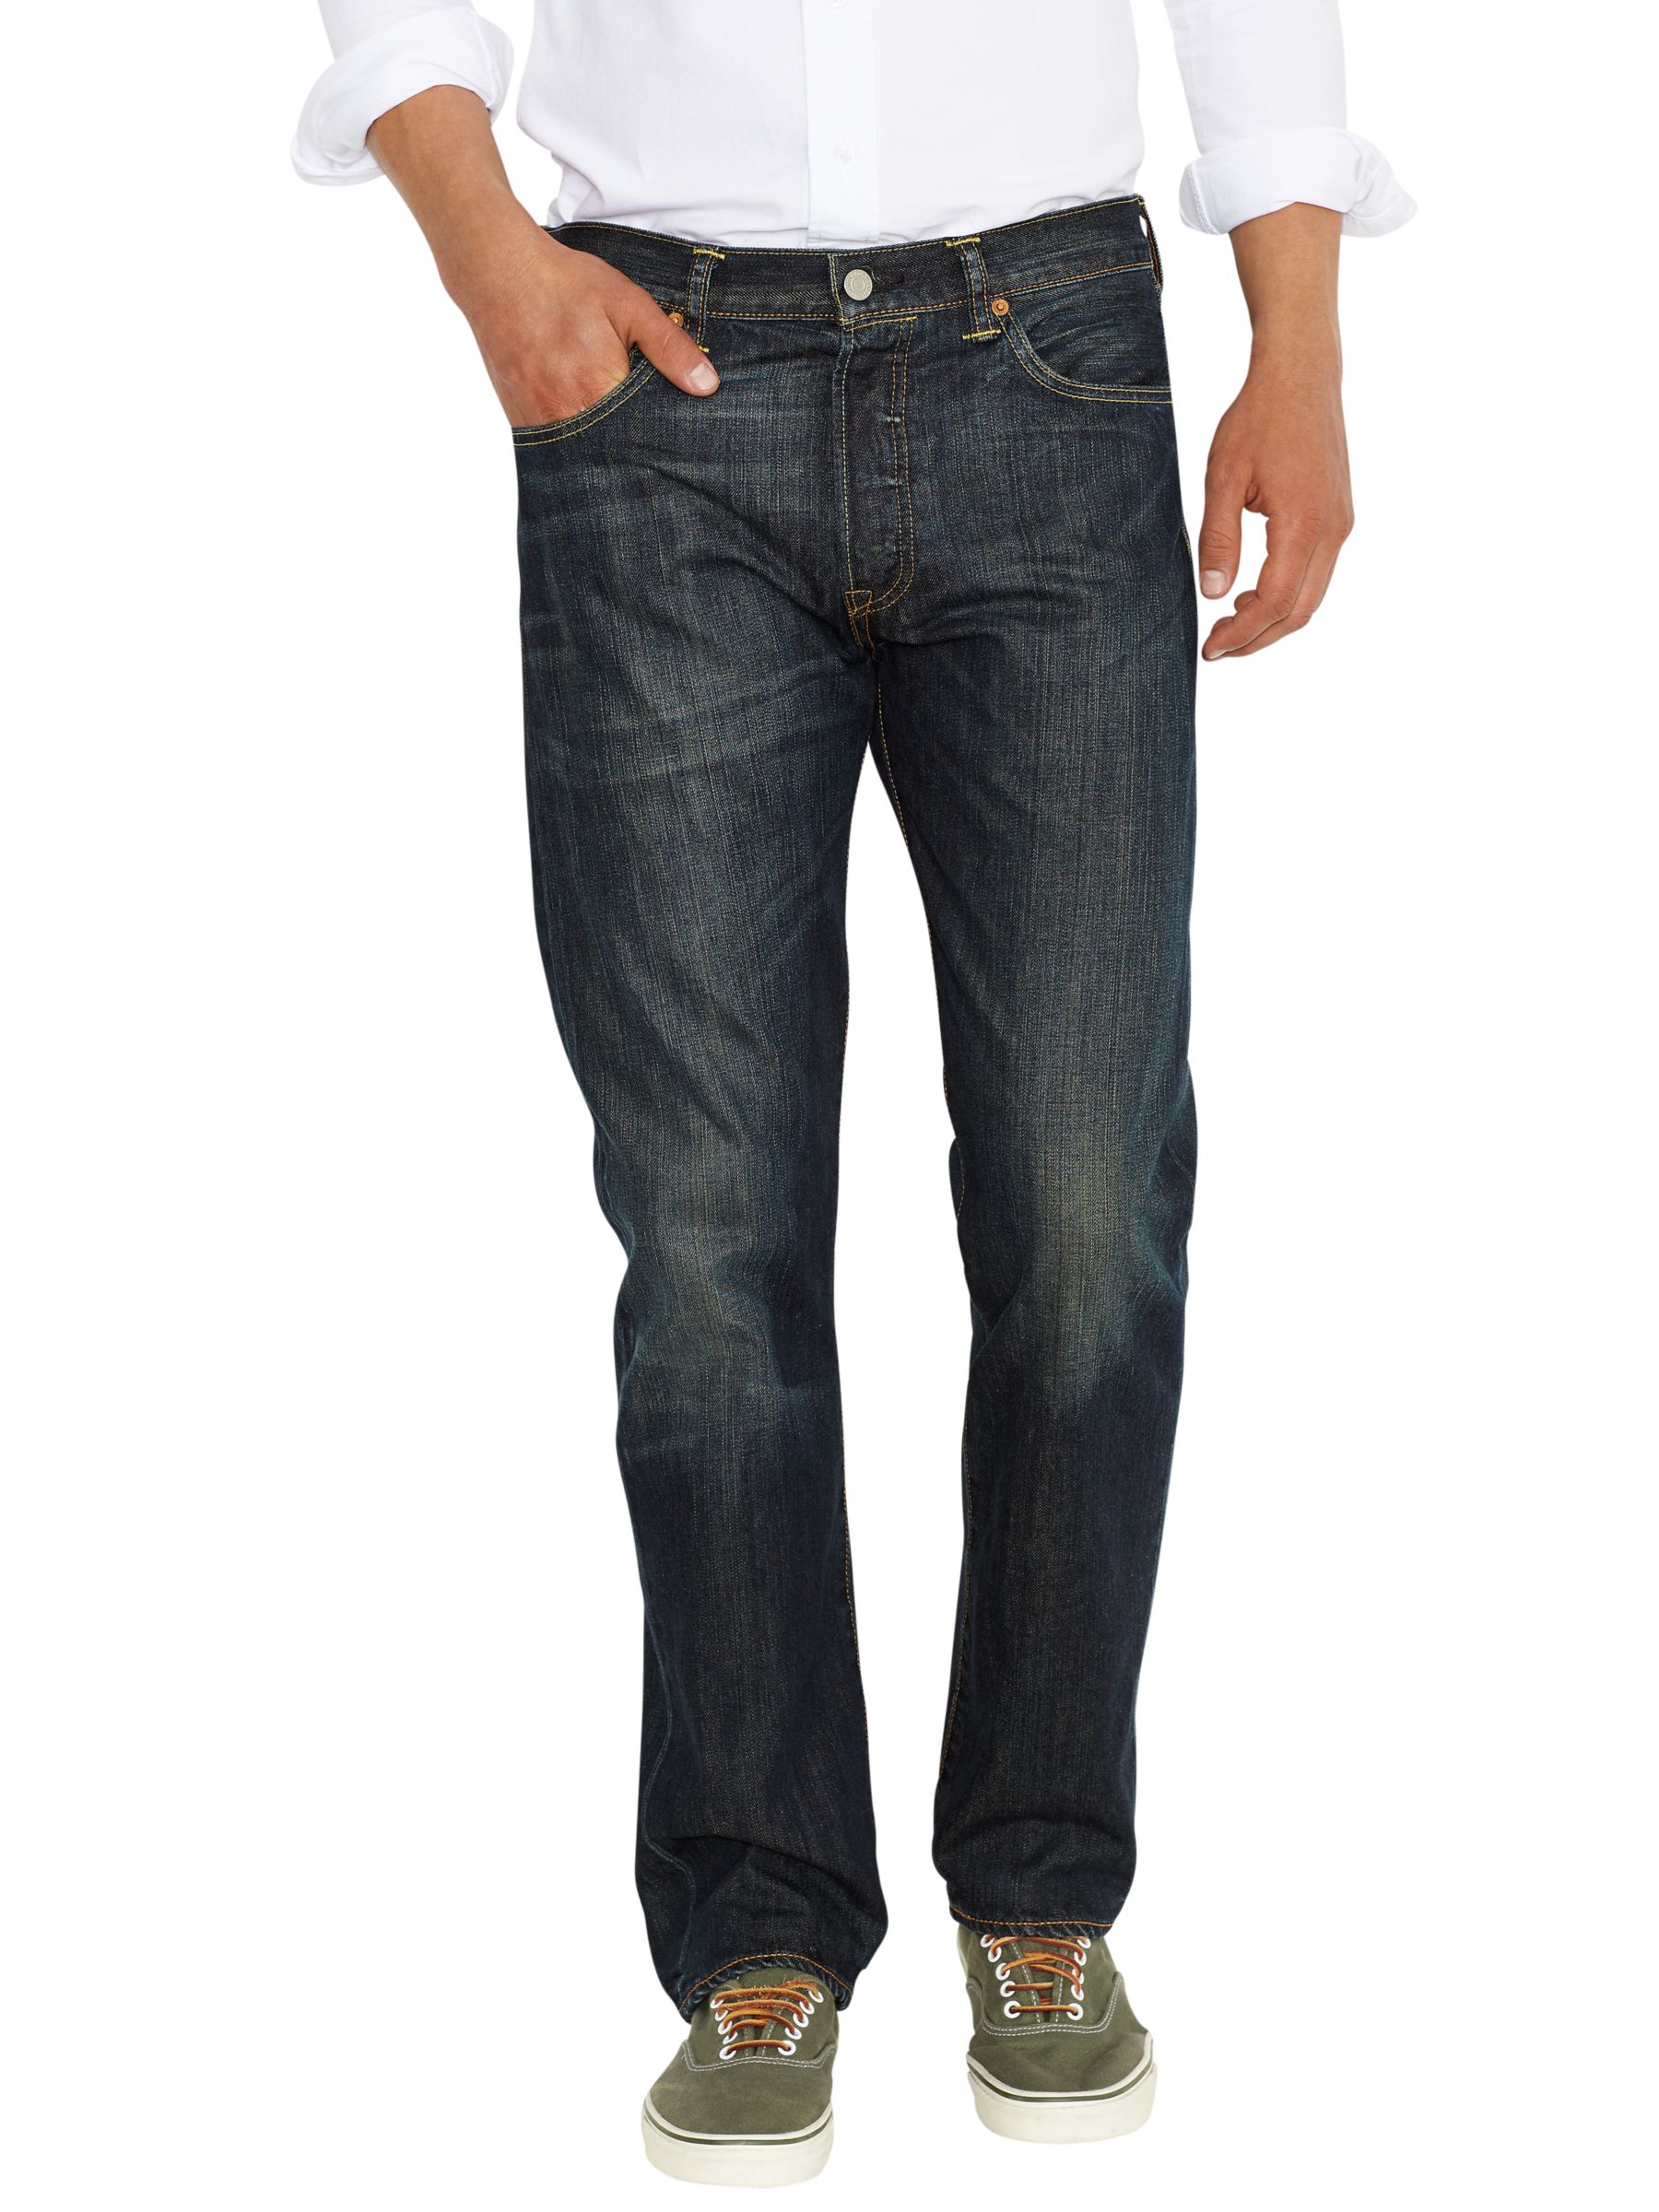 levis dusty black jeans 501